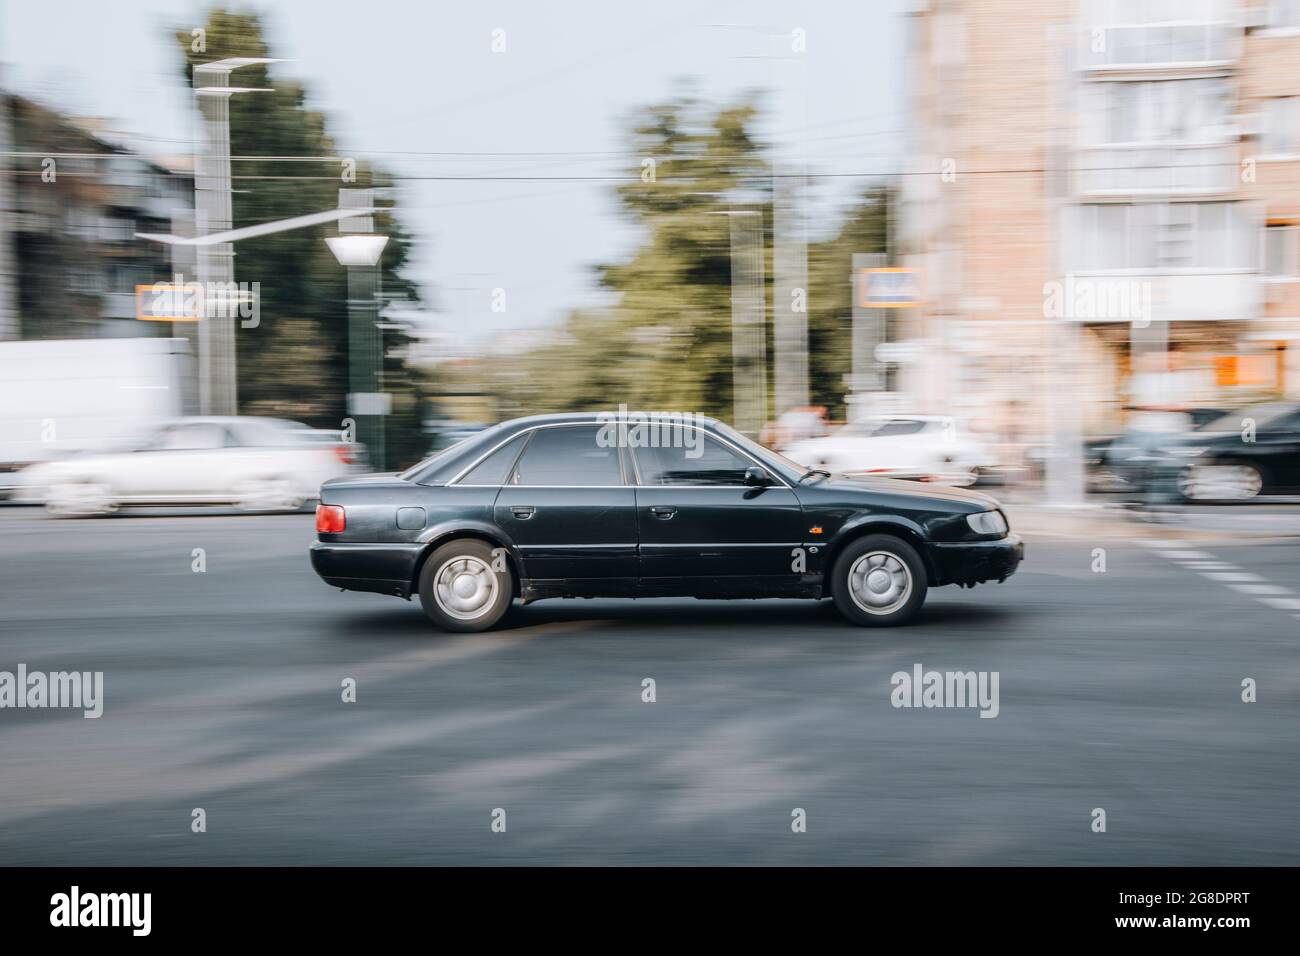 Ukraine, Kyiv - 16 July 2021: Black Audi 100 car moving on the street. Editorial Stock Photo